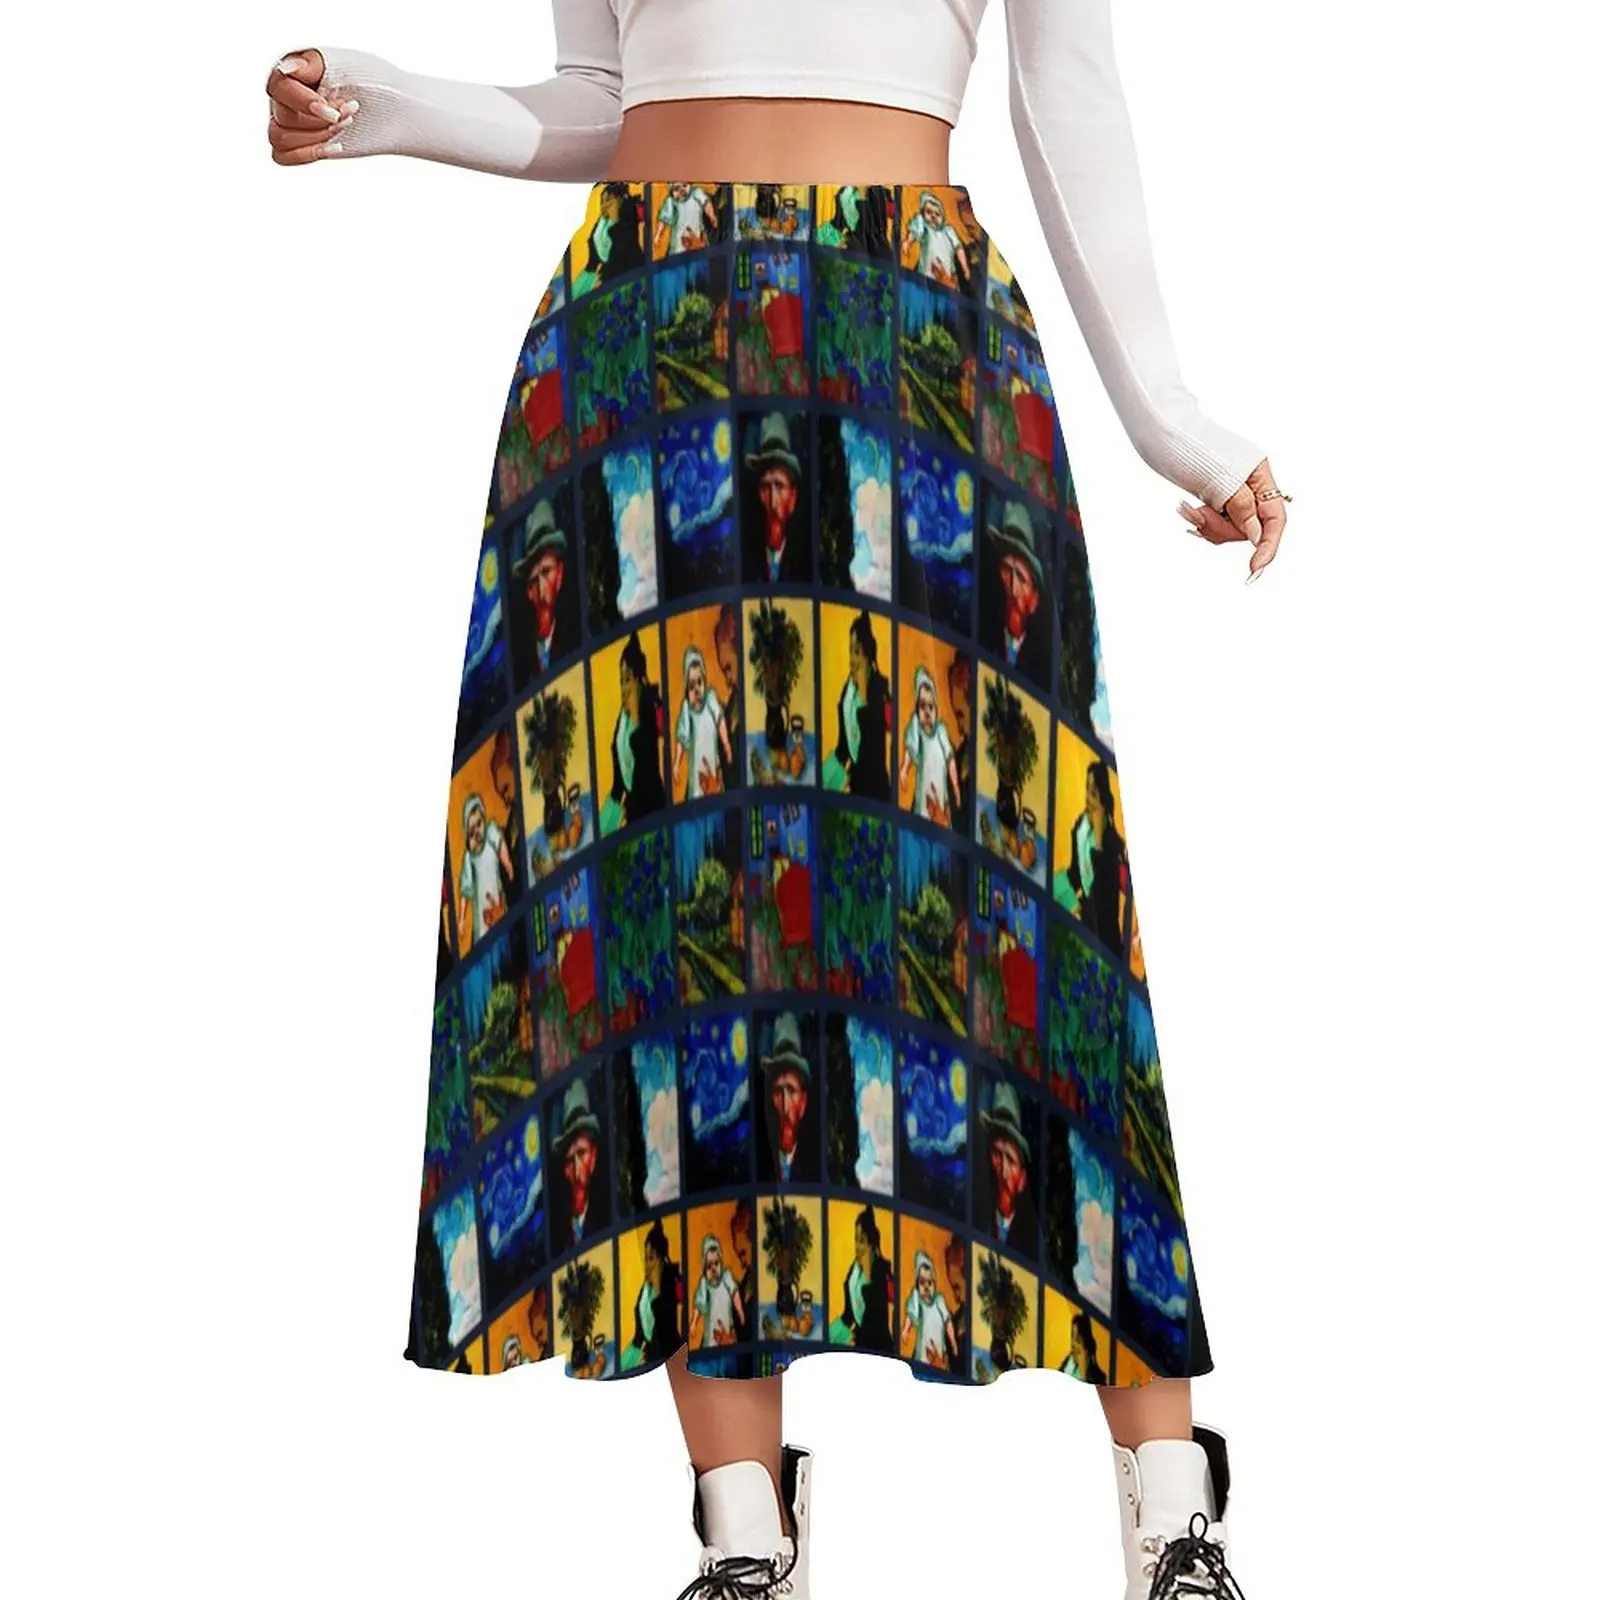 

Van Gogh Skirt Let Us Crazy Modern Boho Skirts Elastic Waist Graphic Street Fashion A-line Skirt Big Size